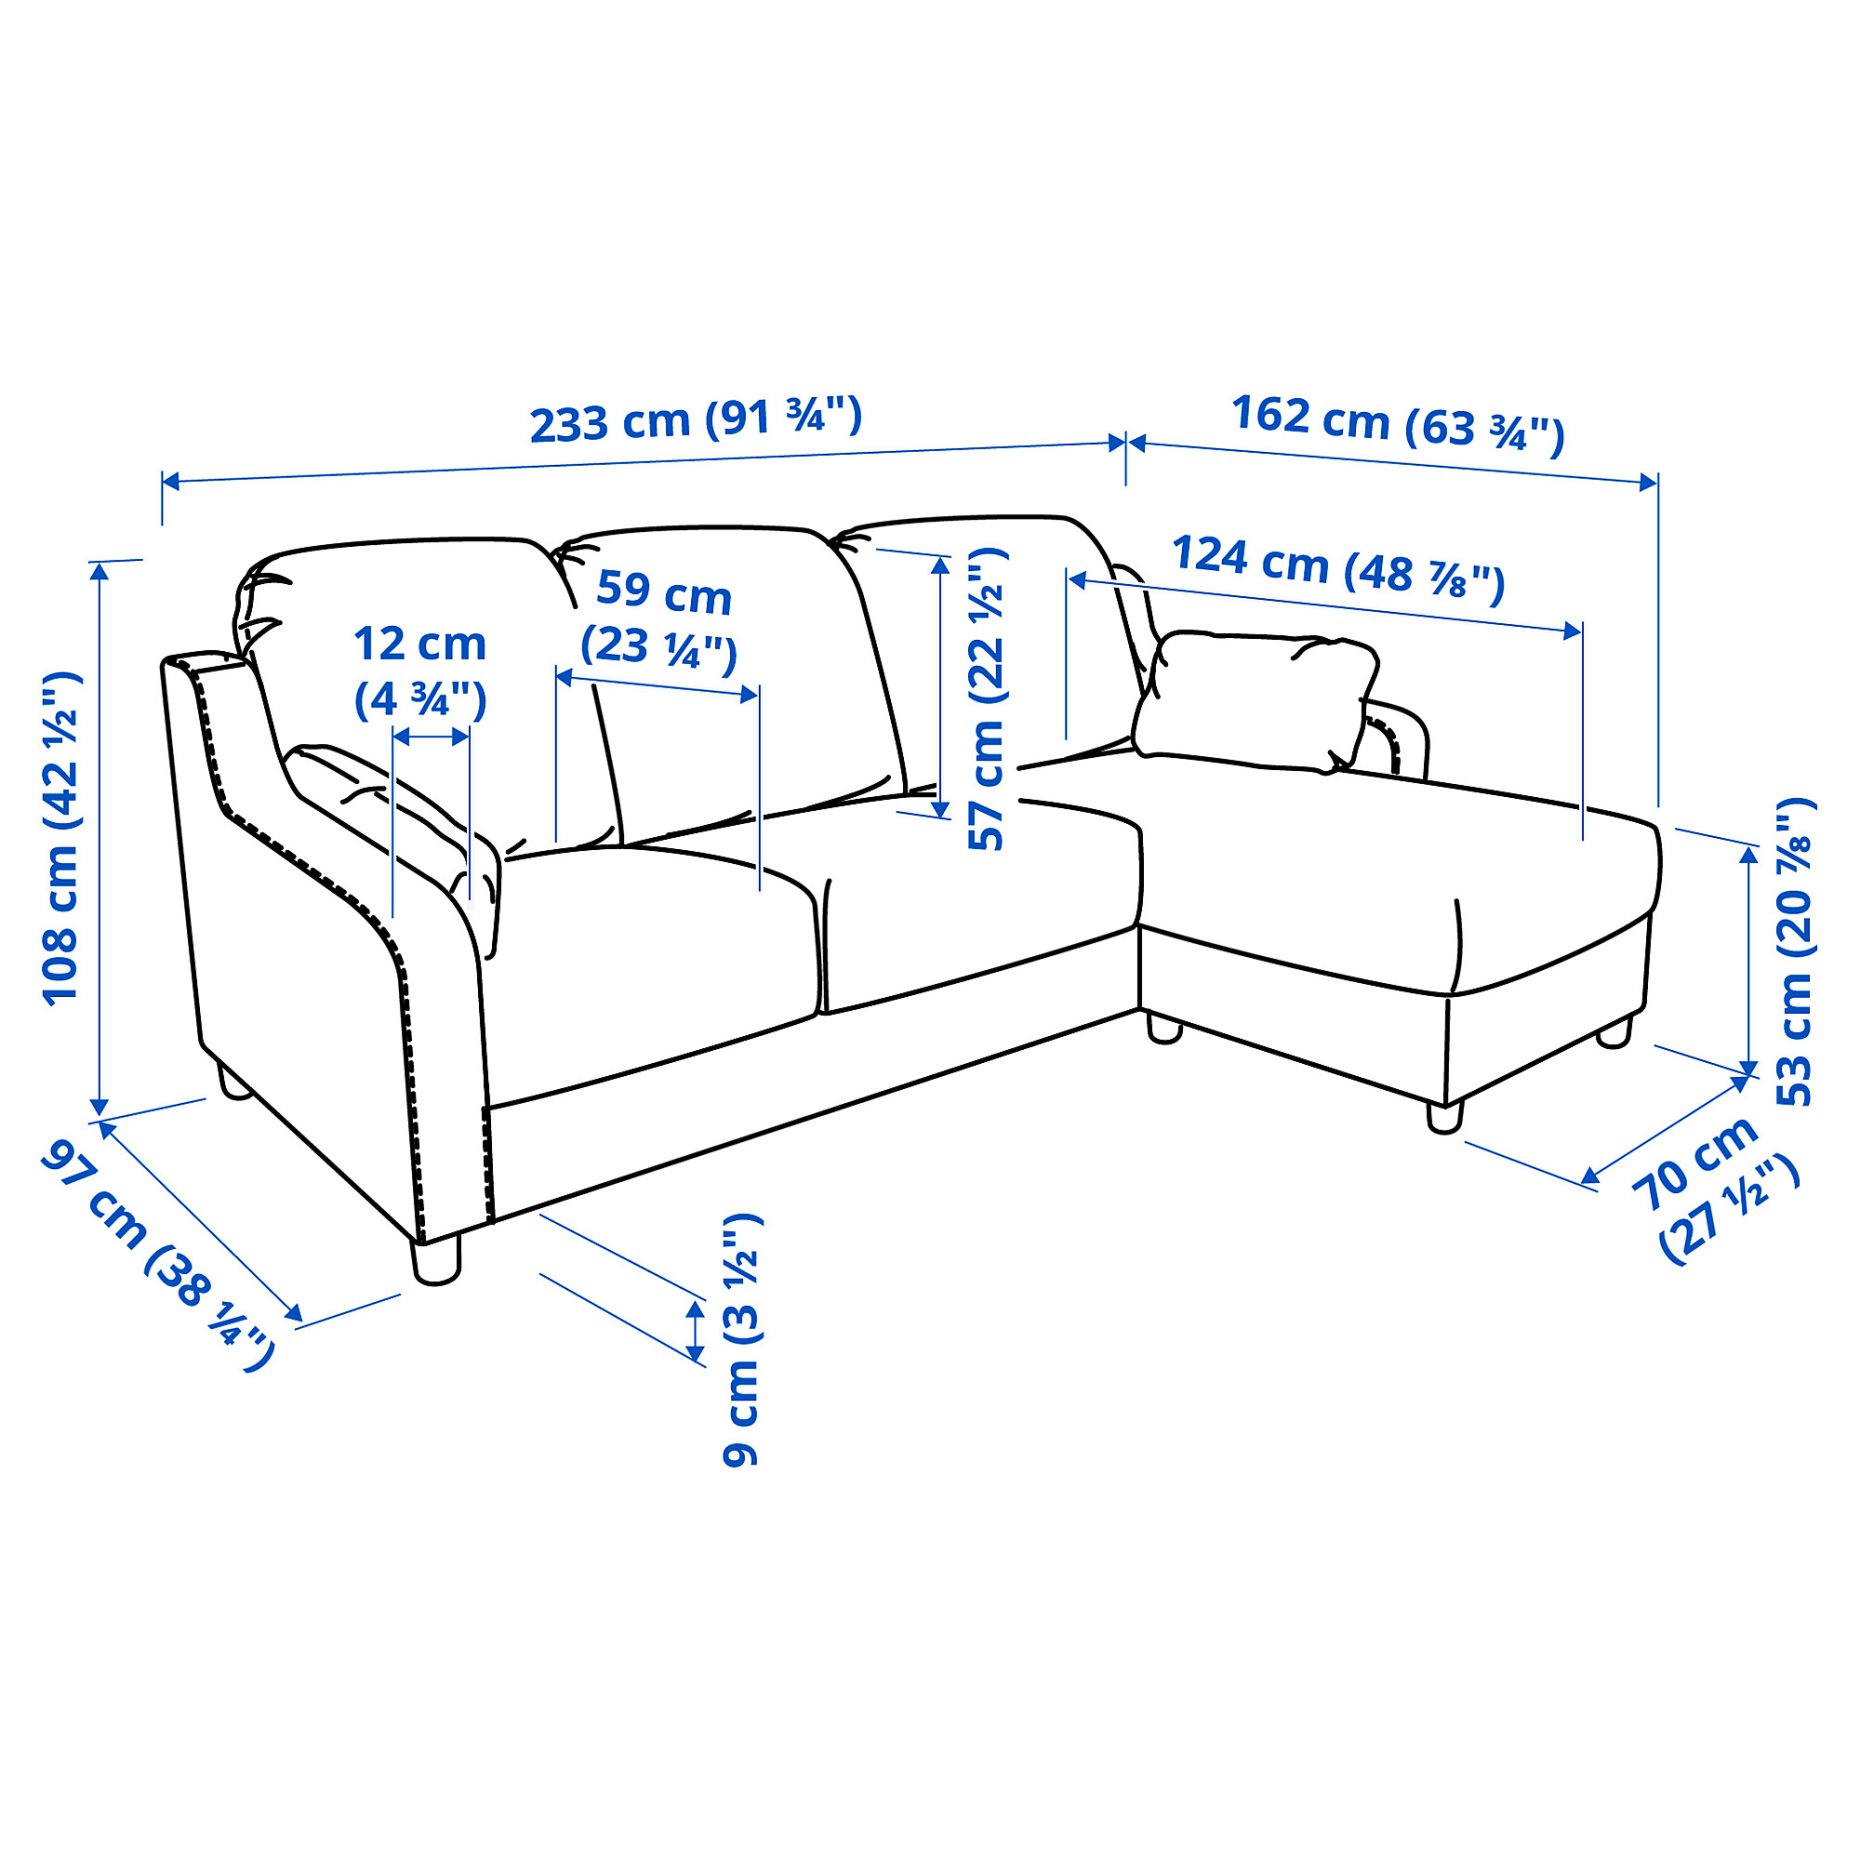 VINLIDEN, 3-seat sofa with chaise longue, 393.046.75